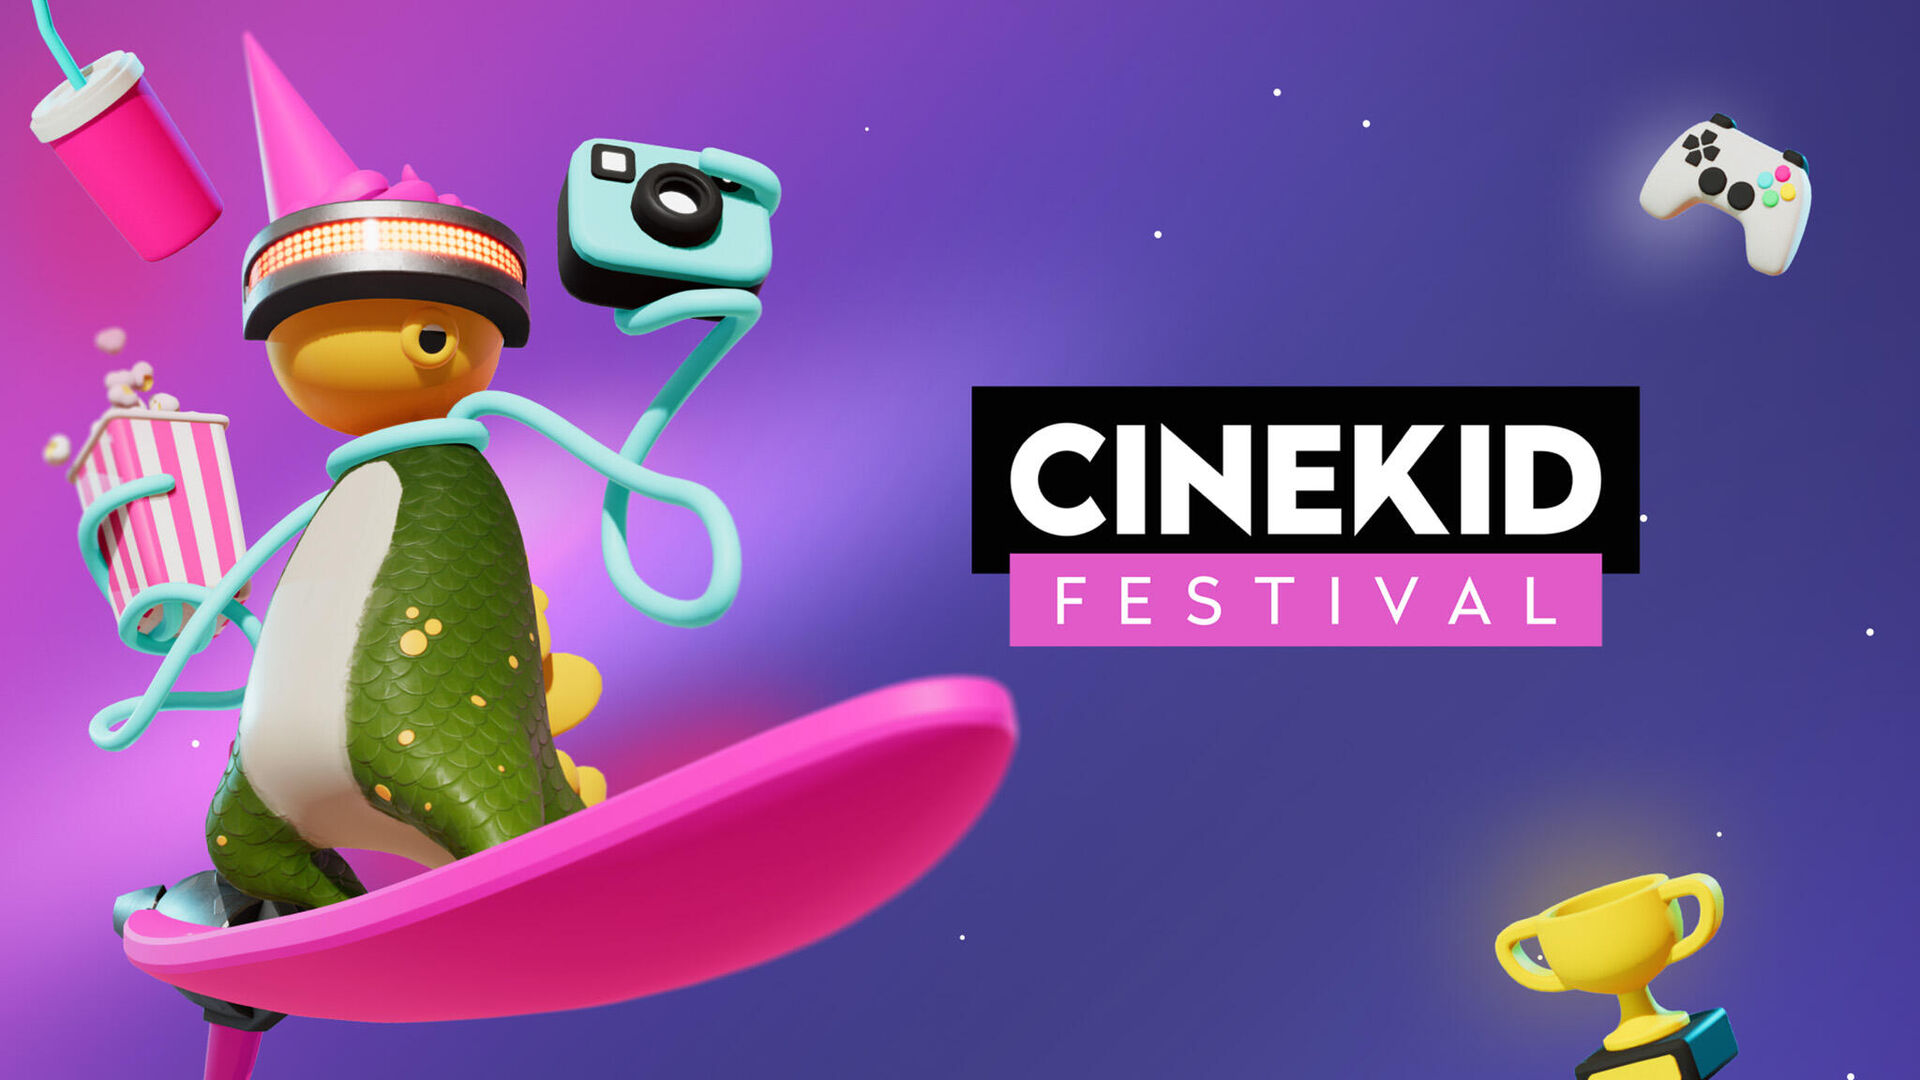 Cinekid Festival